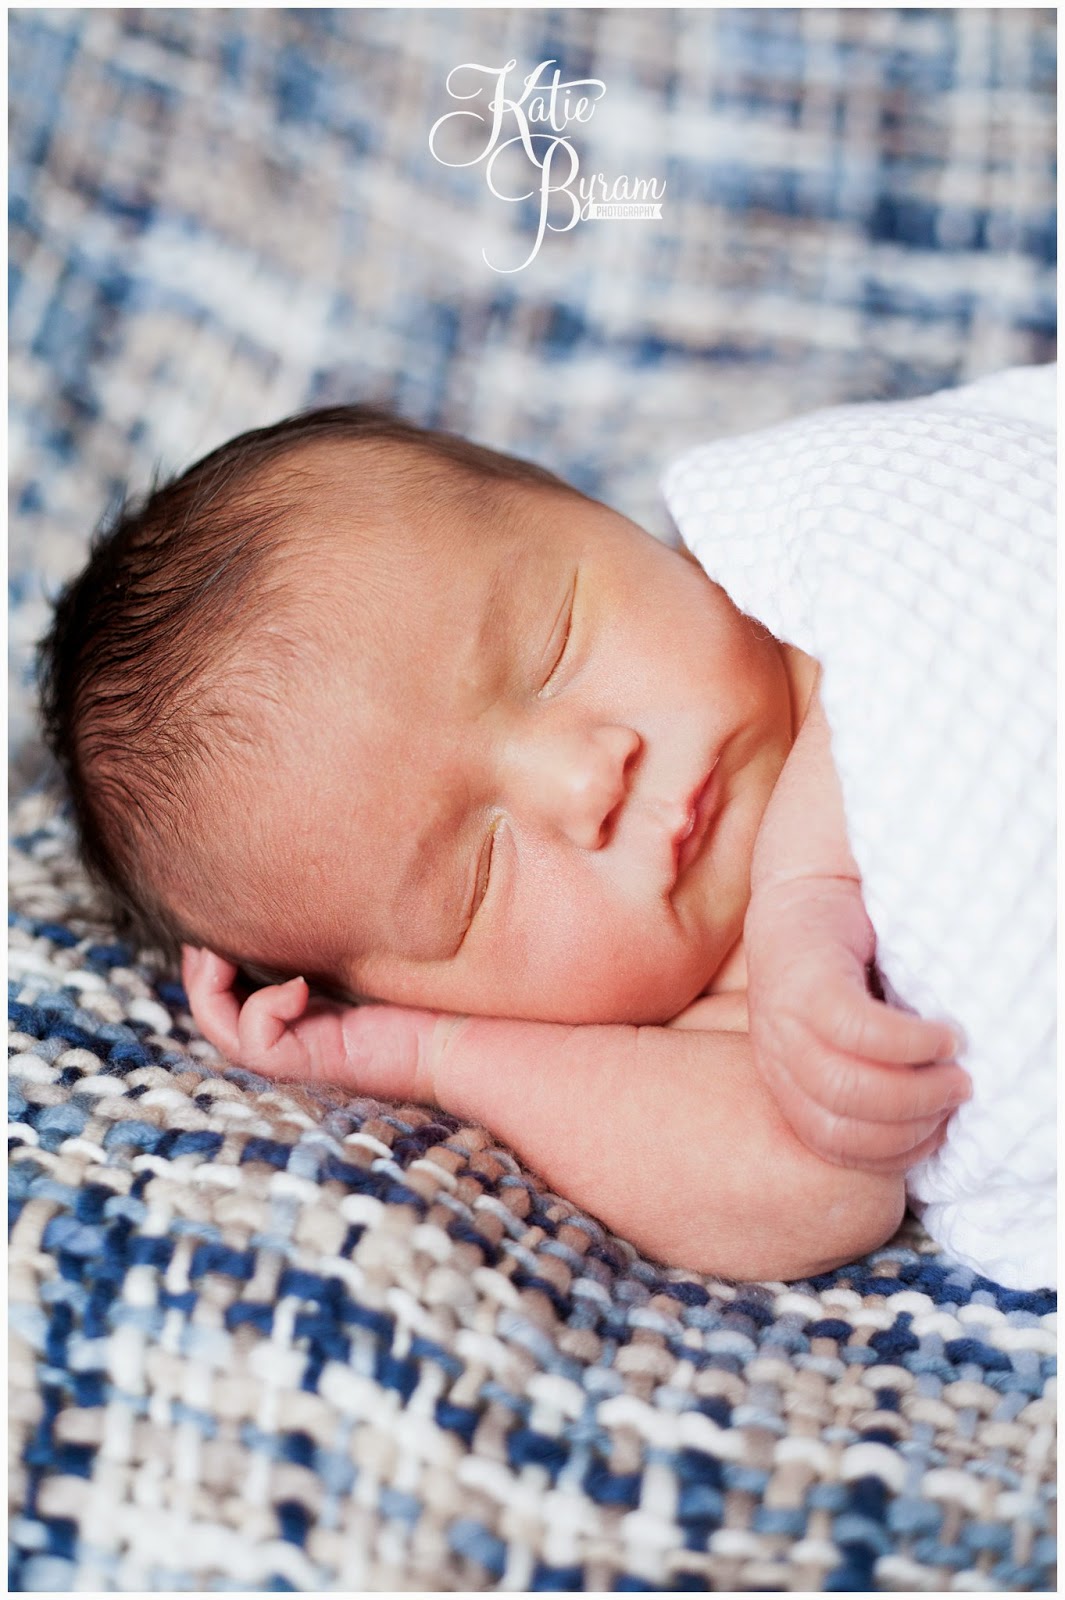 newborn photography, katie byram photography, baby photography, lifestyle photography, relaxed newborn photography